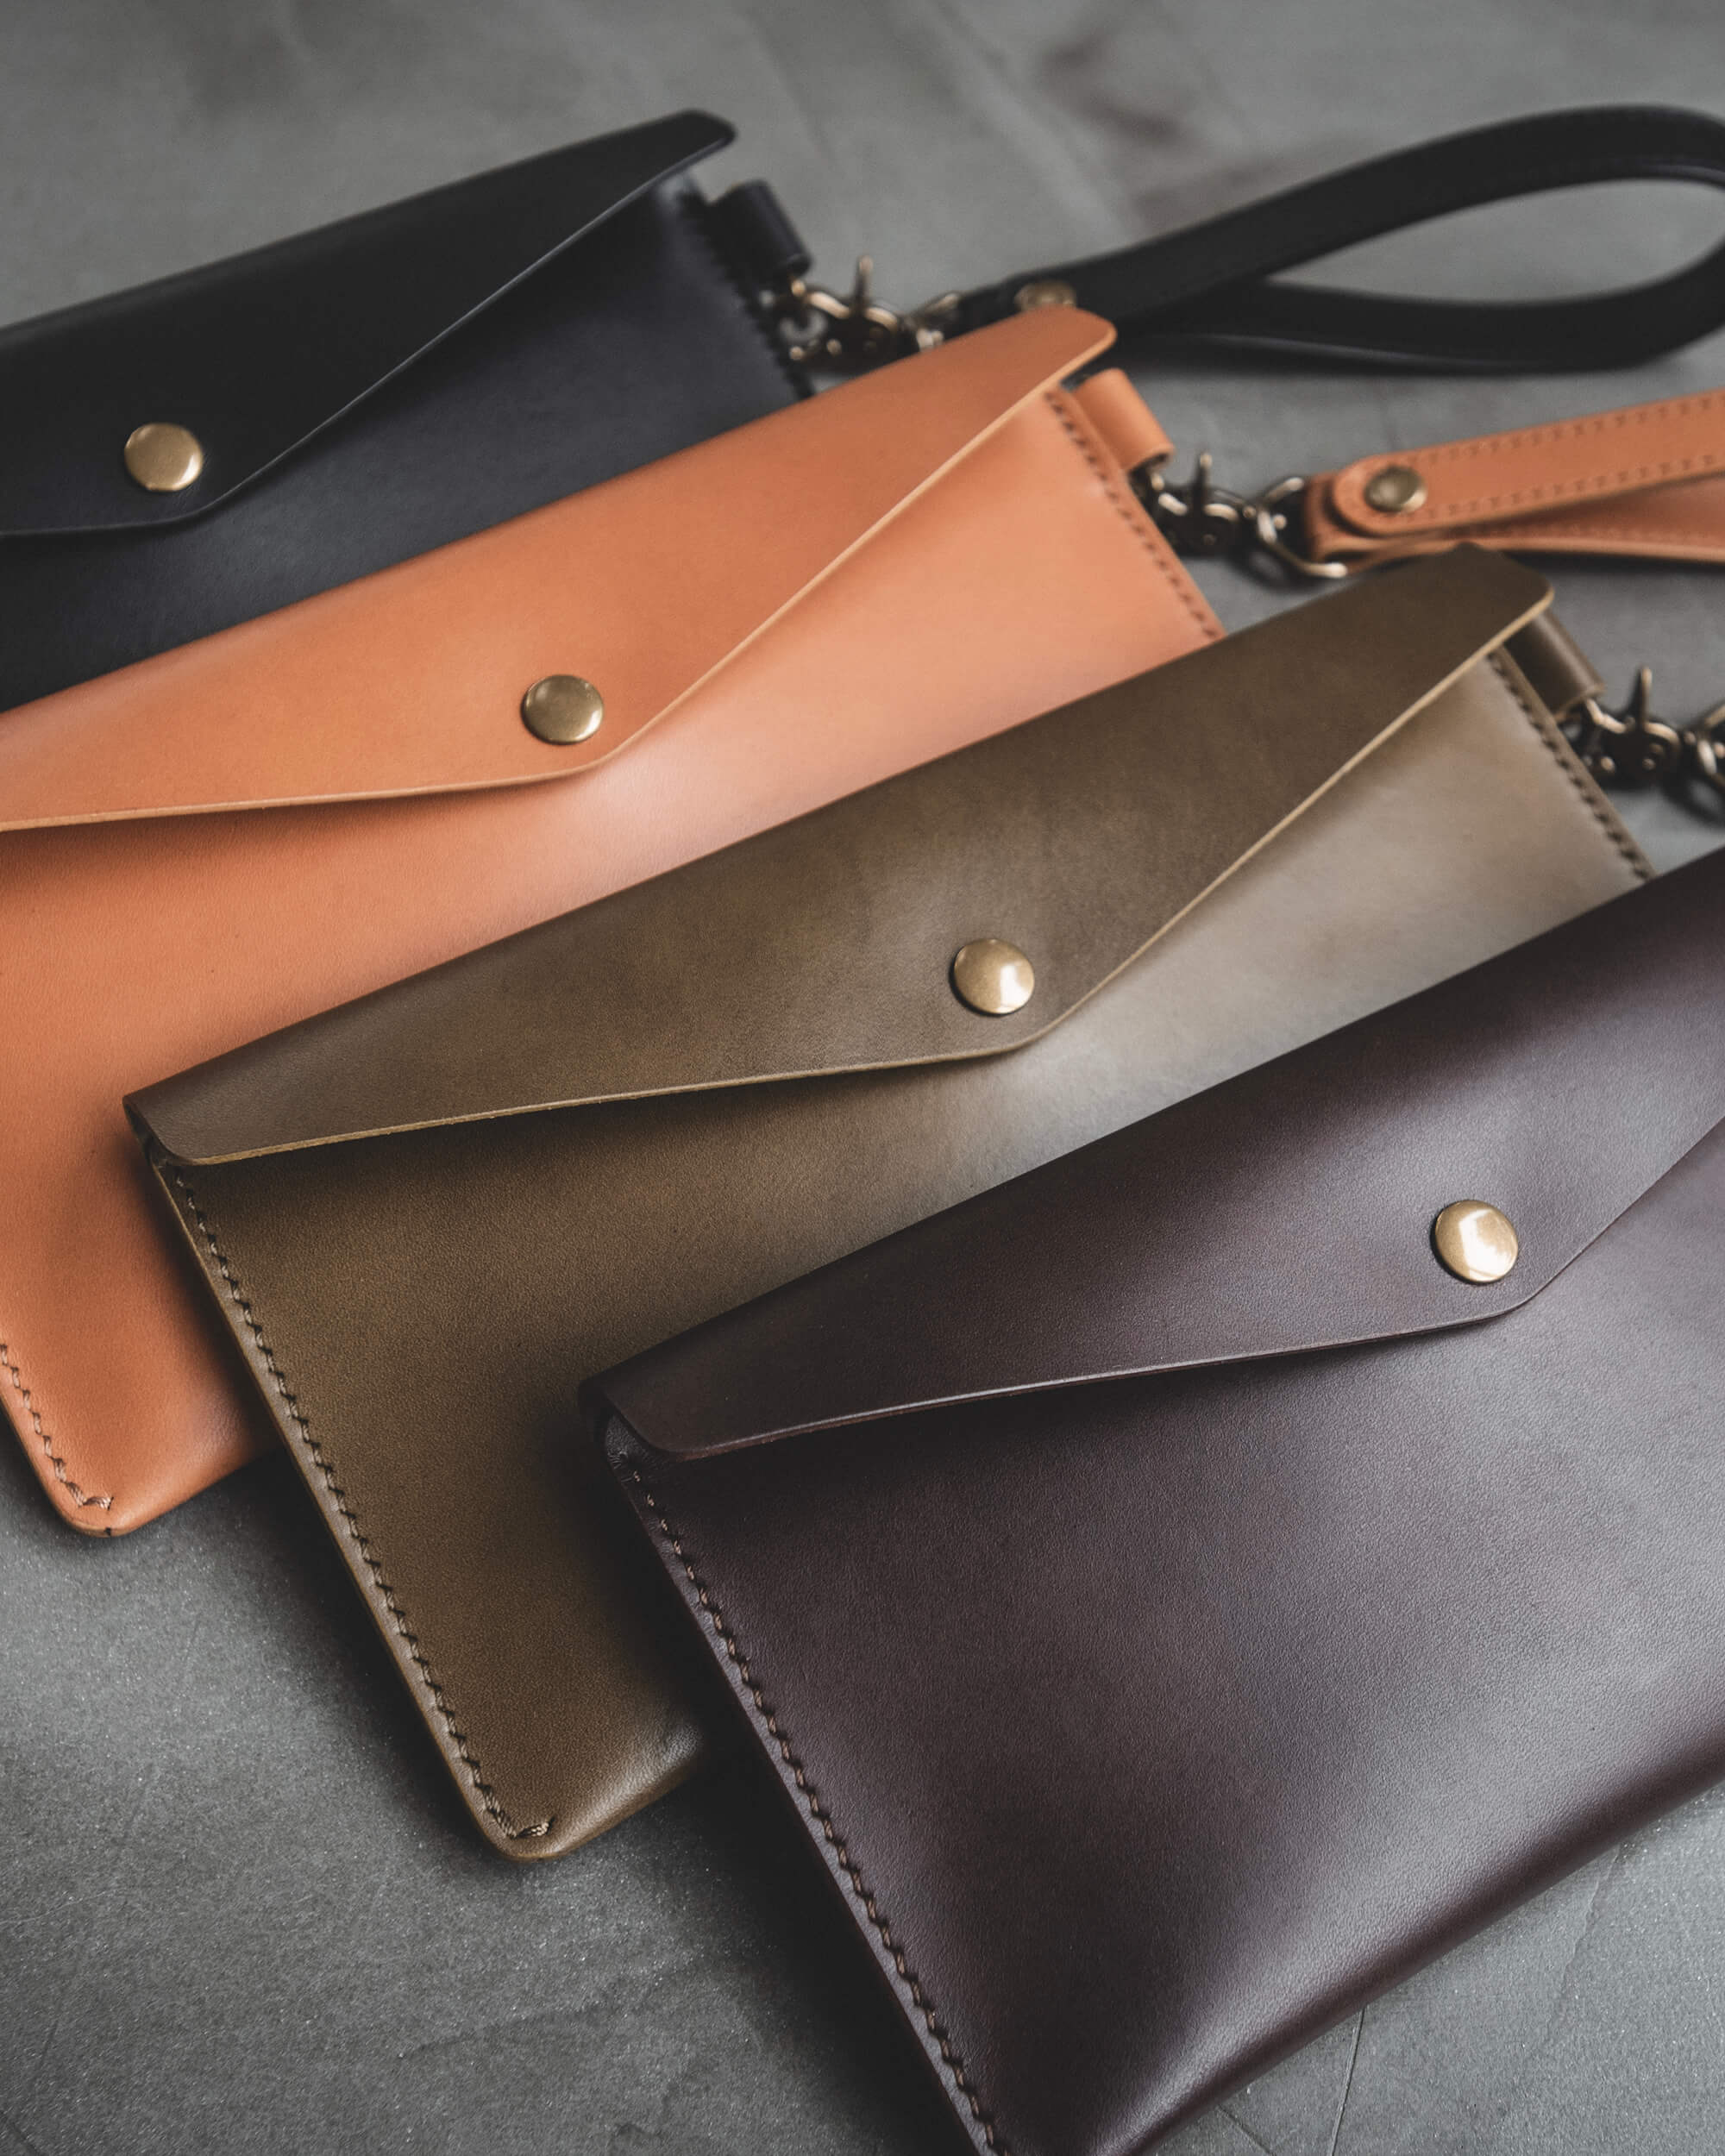 Leather Envelope Clutch - Tan